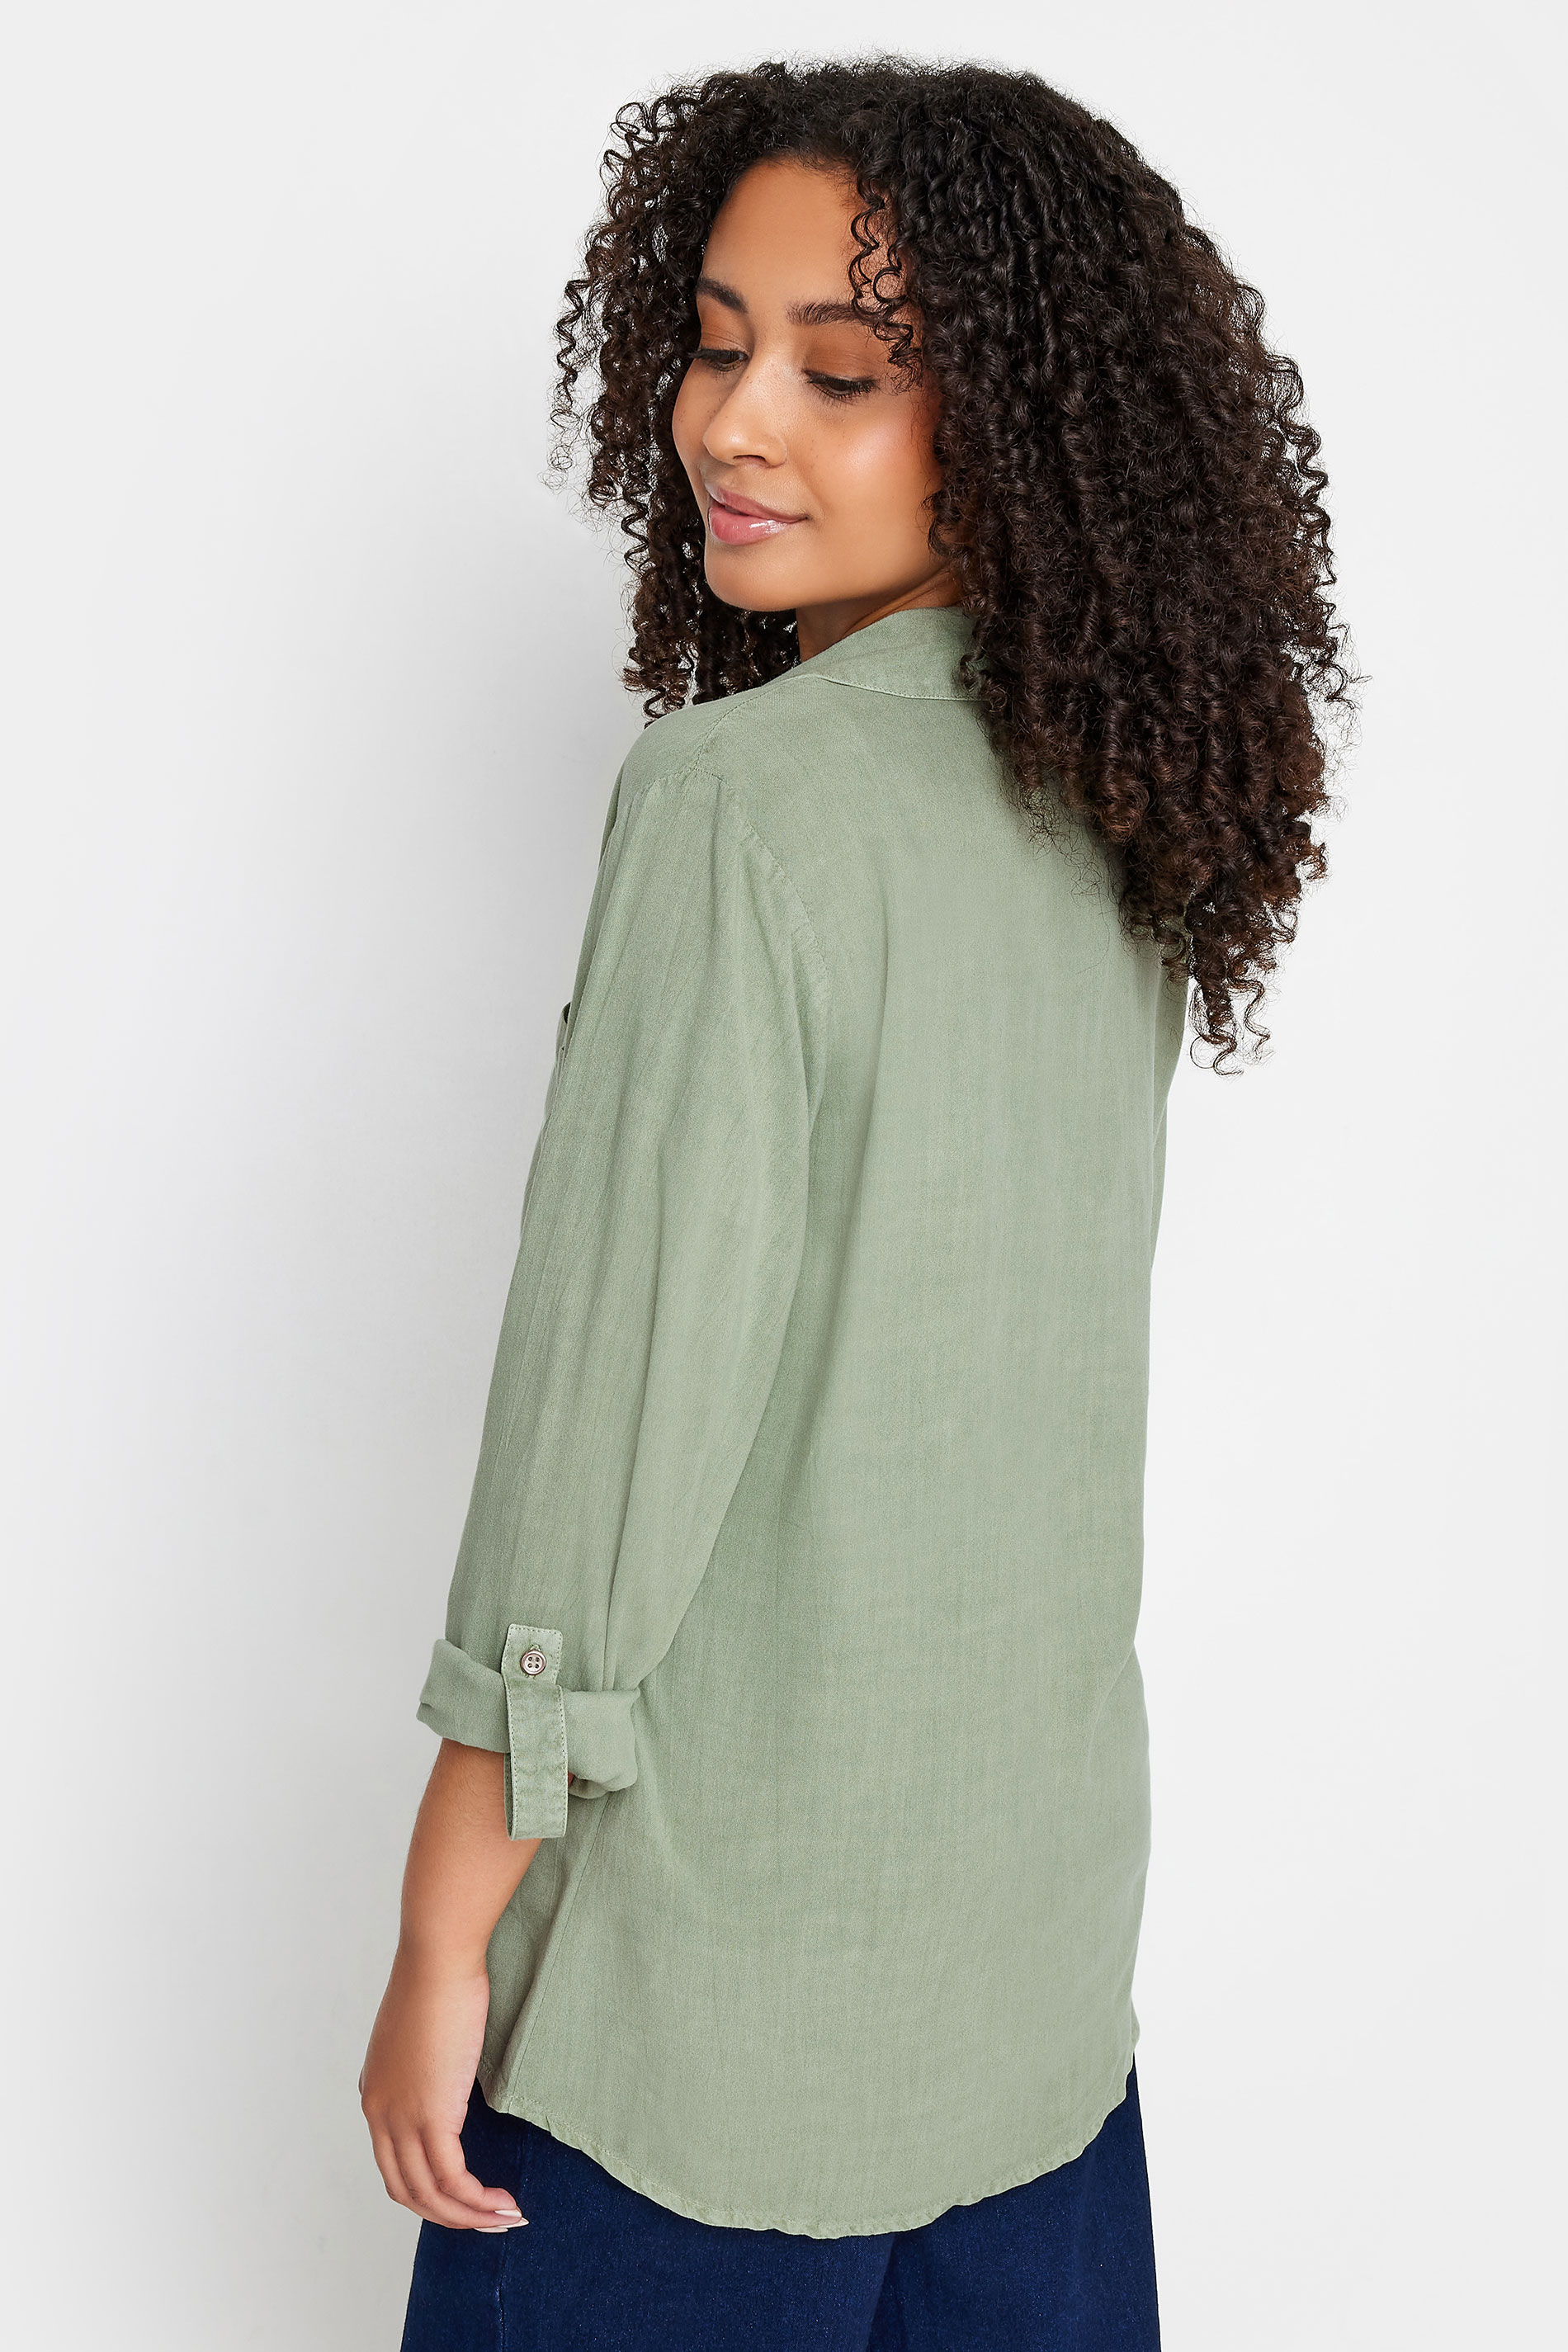 M&Co Petite Sage Green Button Up Shirt | M&Co 3